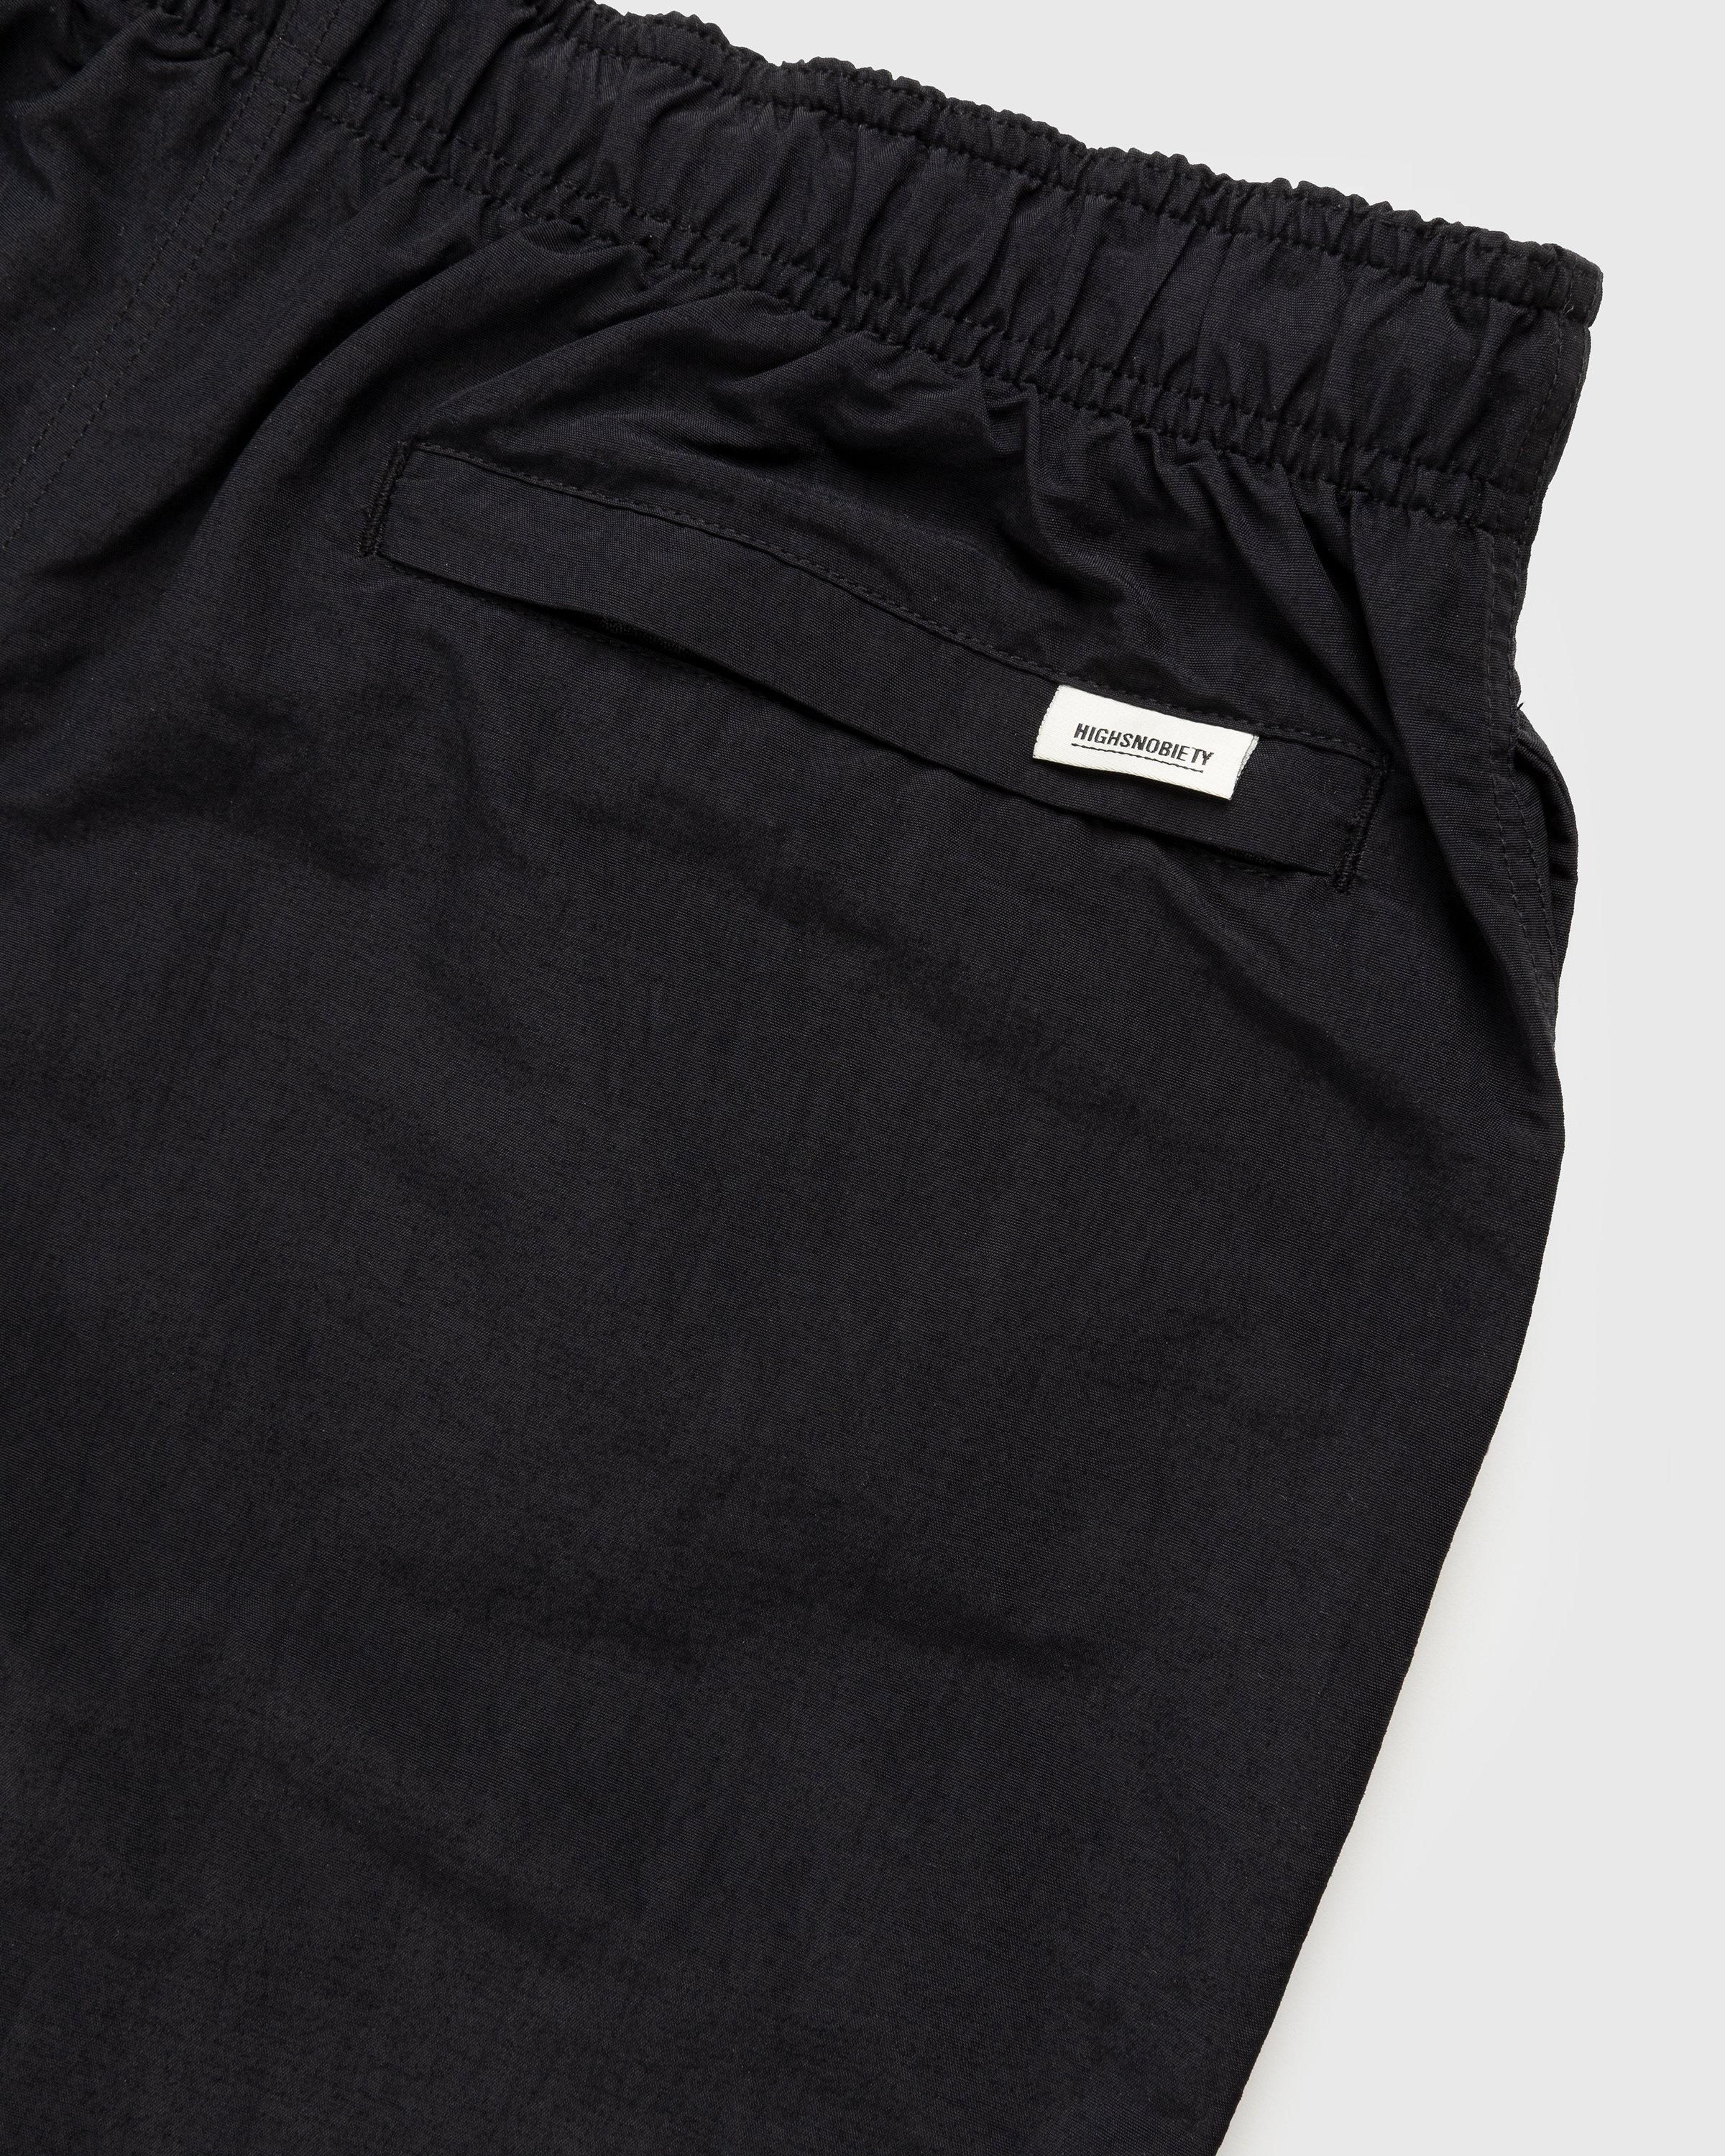 RUF x Highsnobiety – Water Shorts Black - Shorts - Black - Image 7